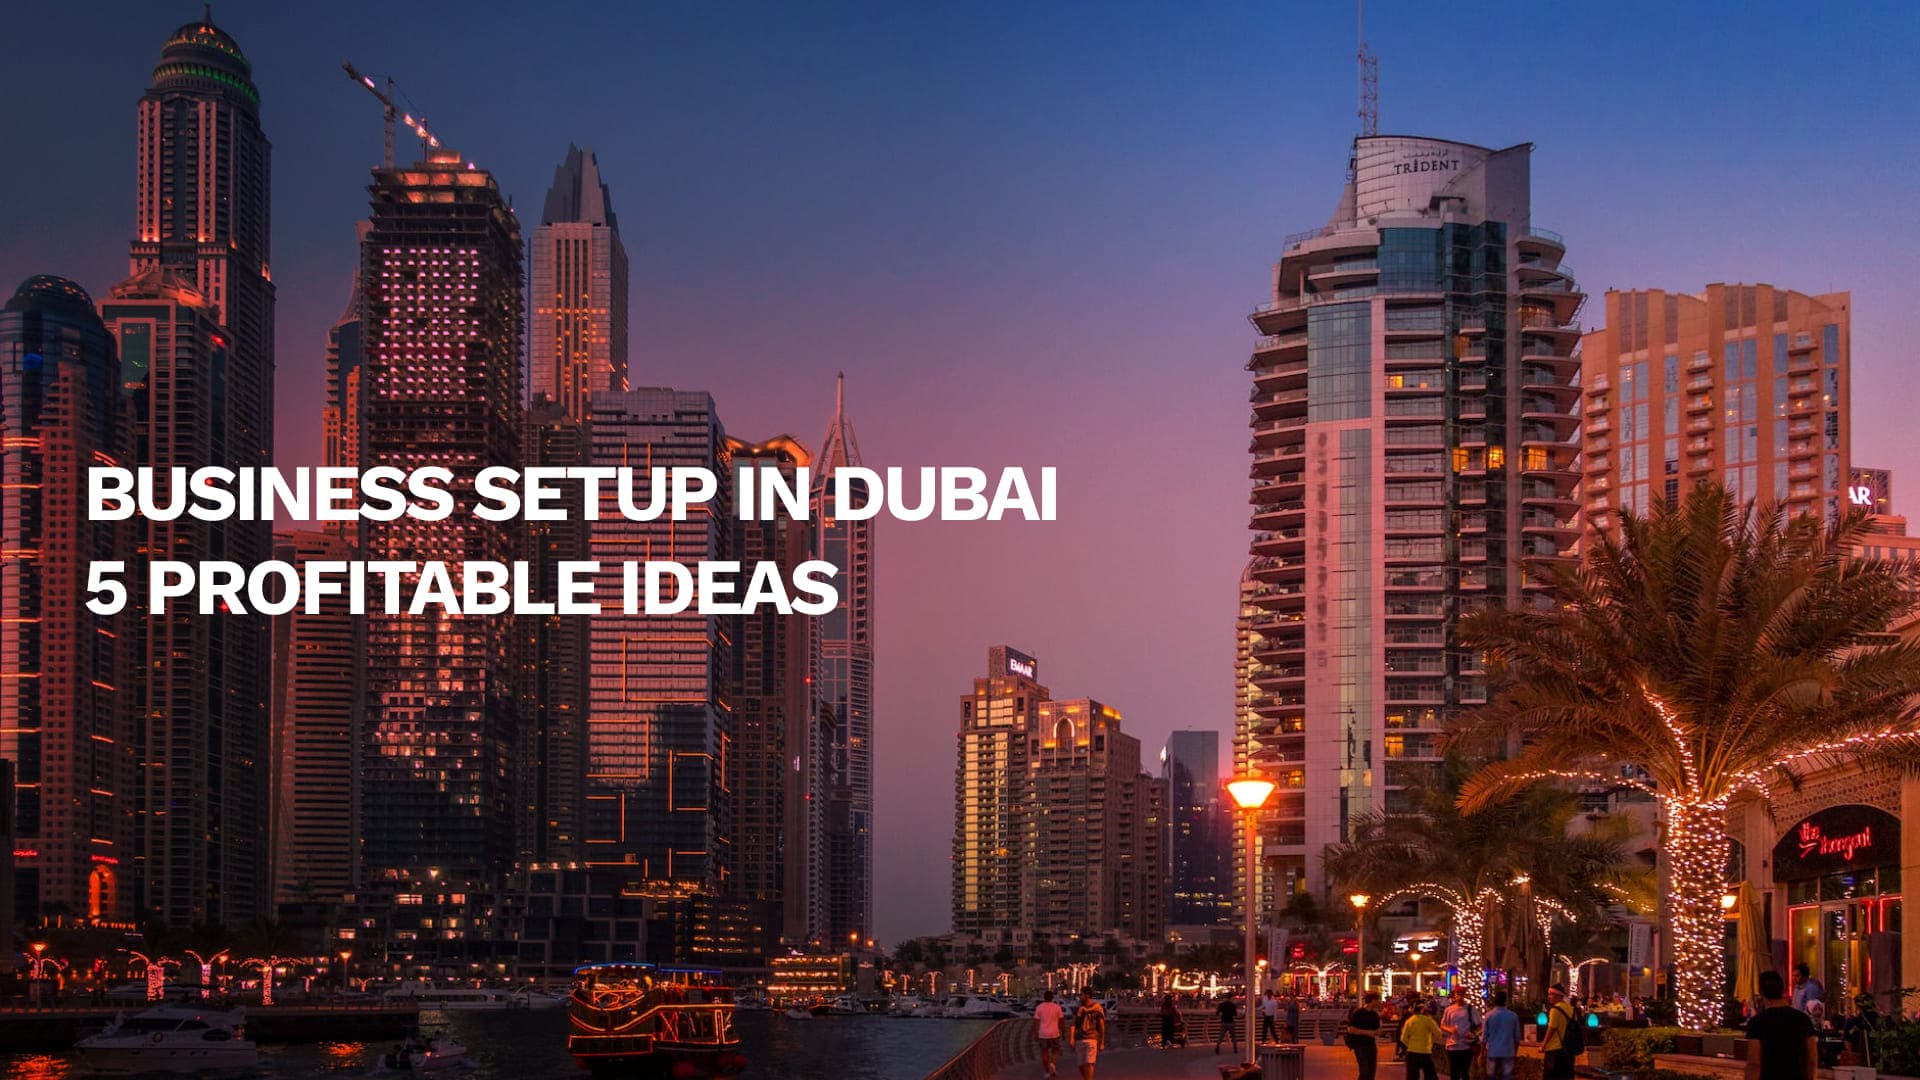 Top 5 Profitable Ideas for Business Setup in Dubai